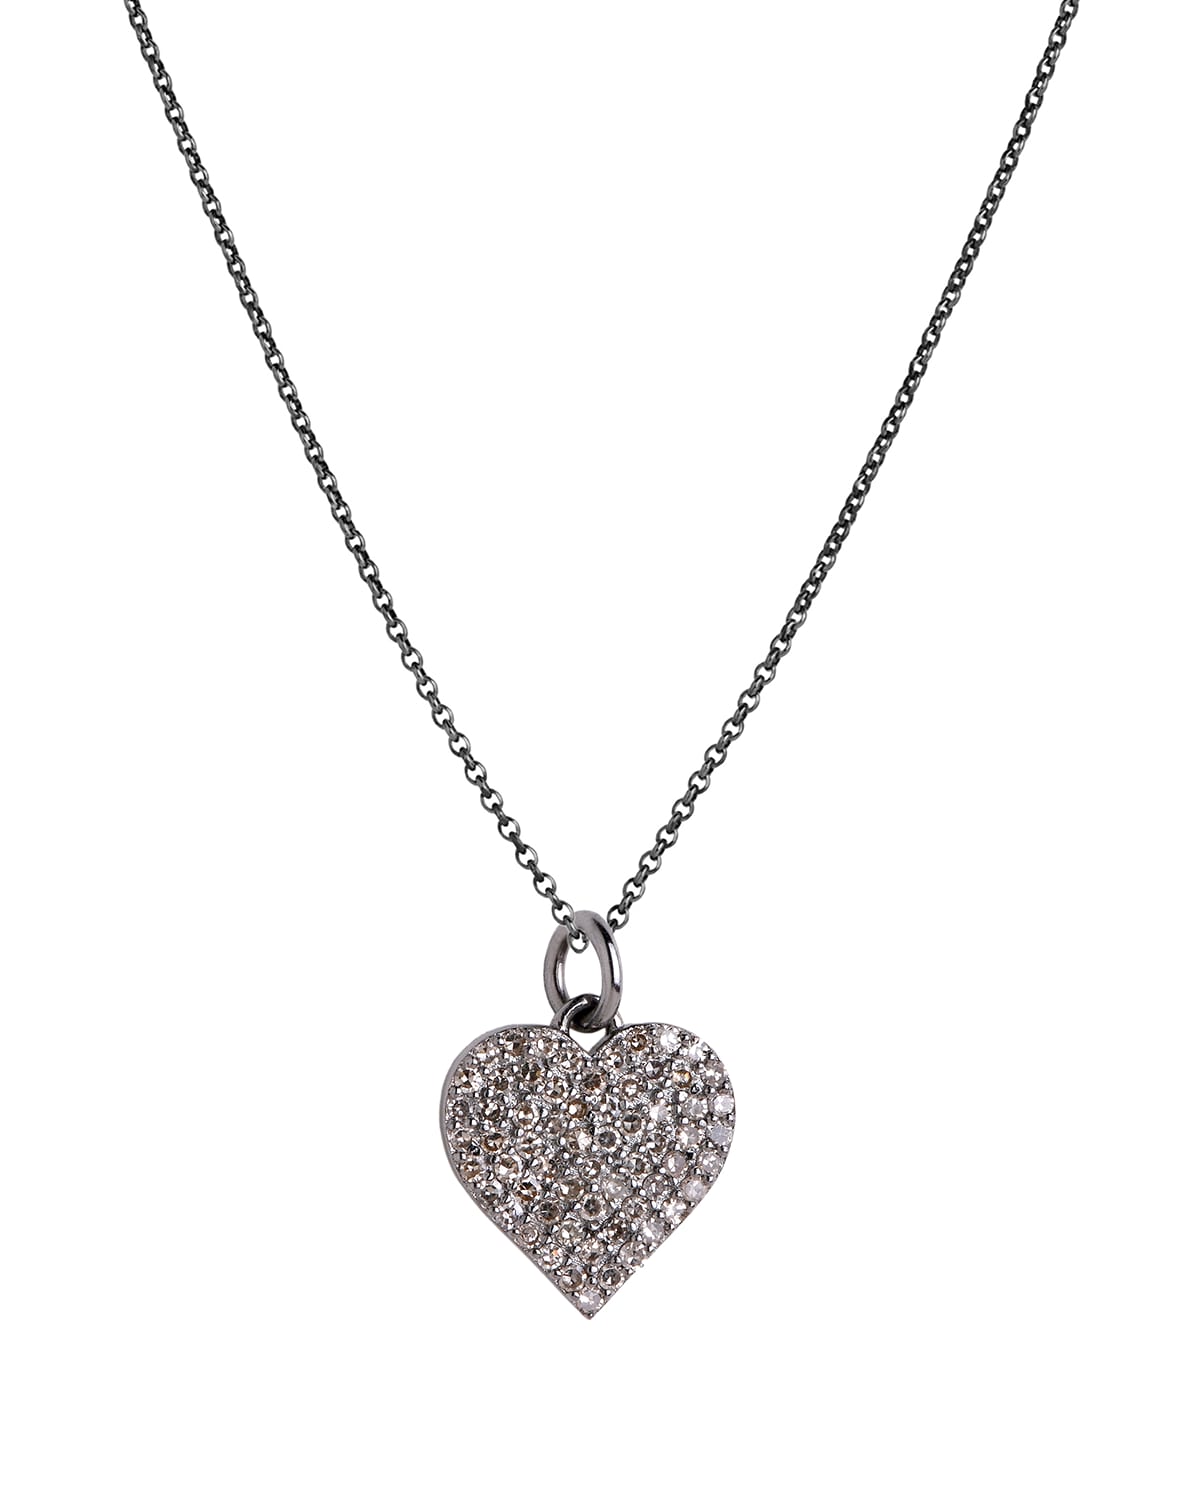 Bridget King Jewelry Diamond Heart Necklace